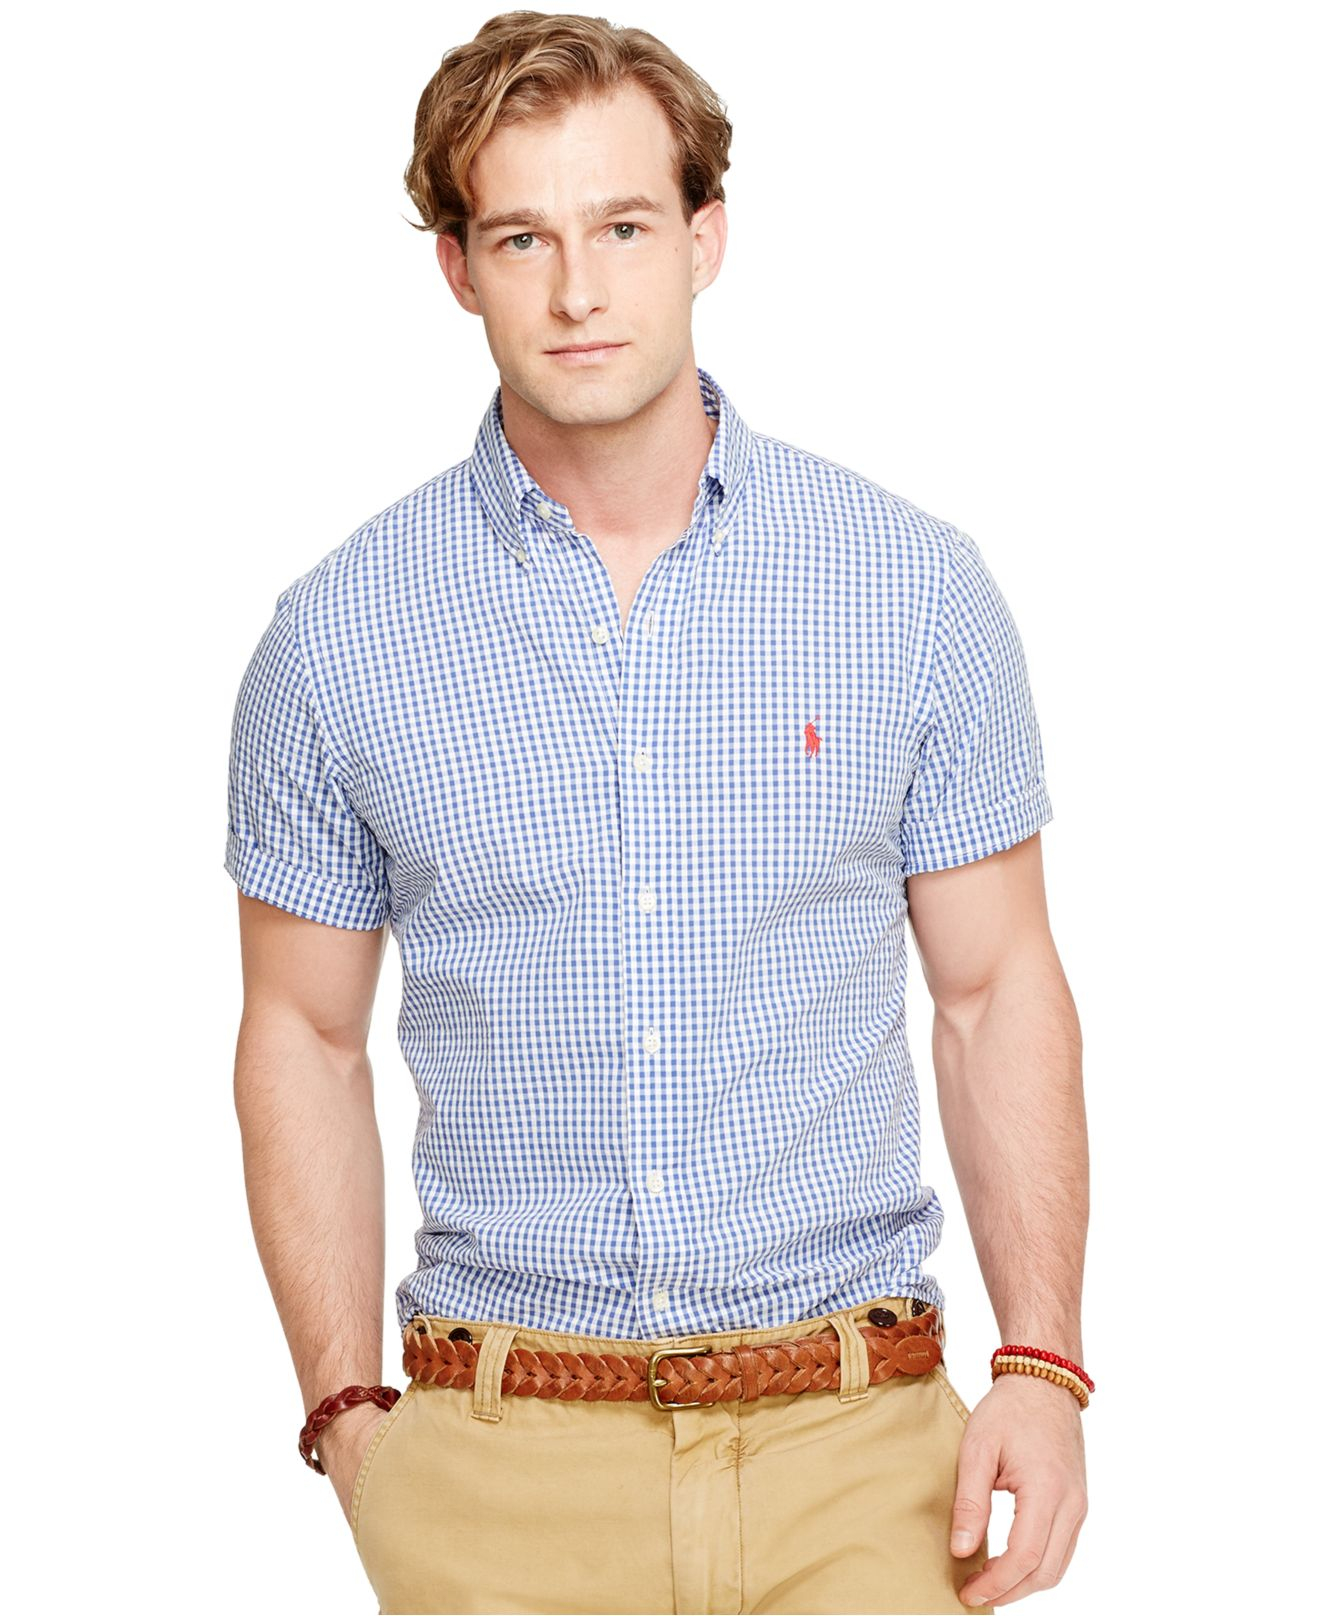 Lyst - Polo Ralph Lauren Check Seersucker Shirt in Blue for Men